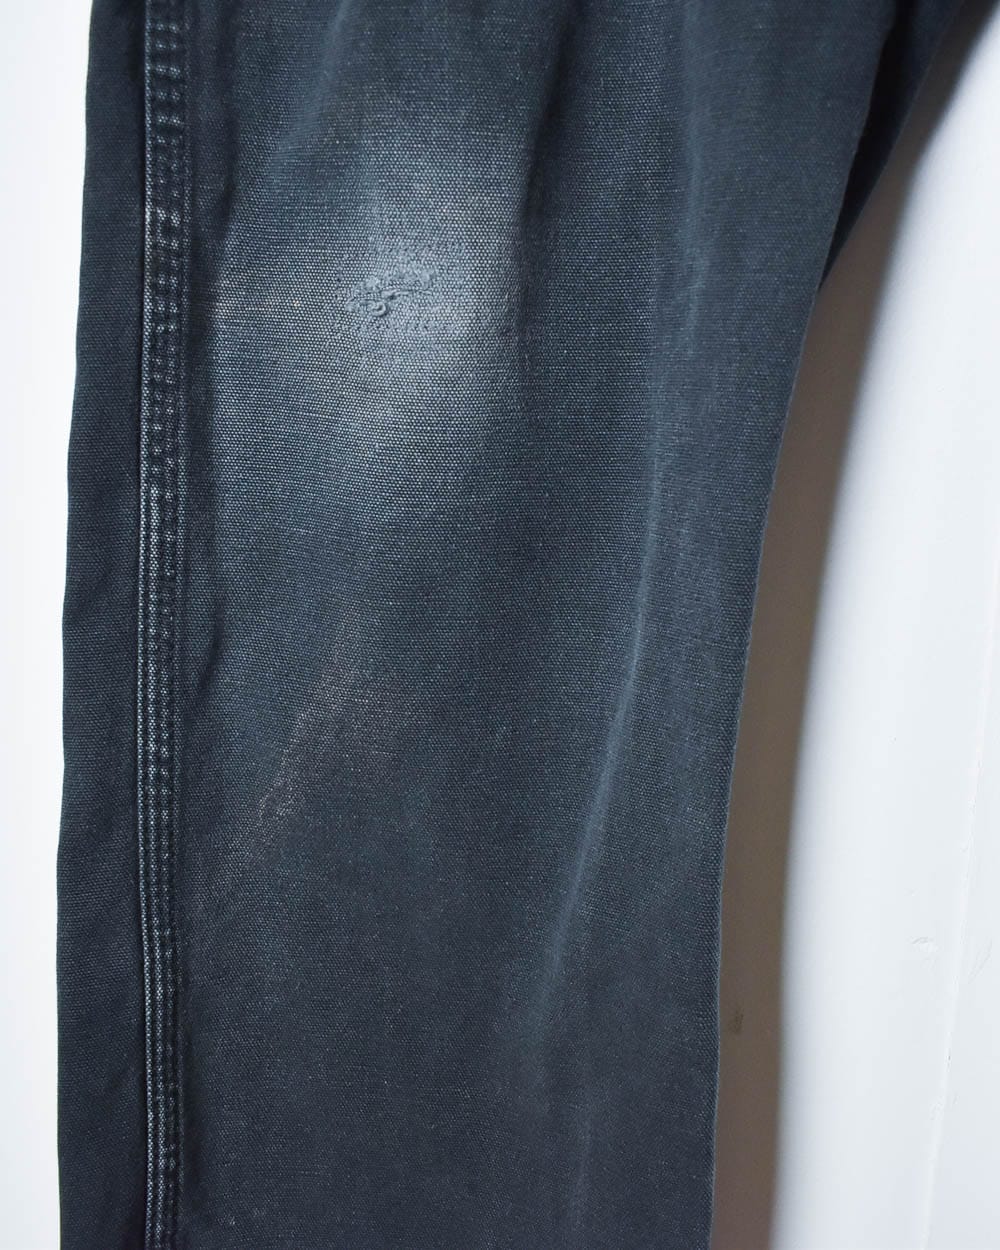 Black Dickies Distressed Carpenter Jeans - W36 L30